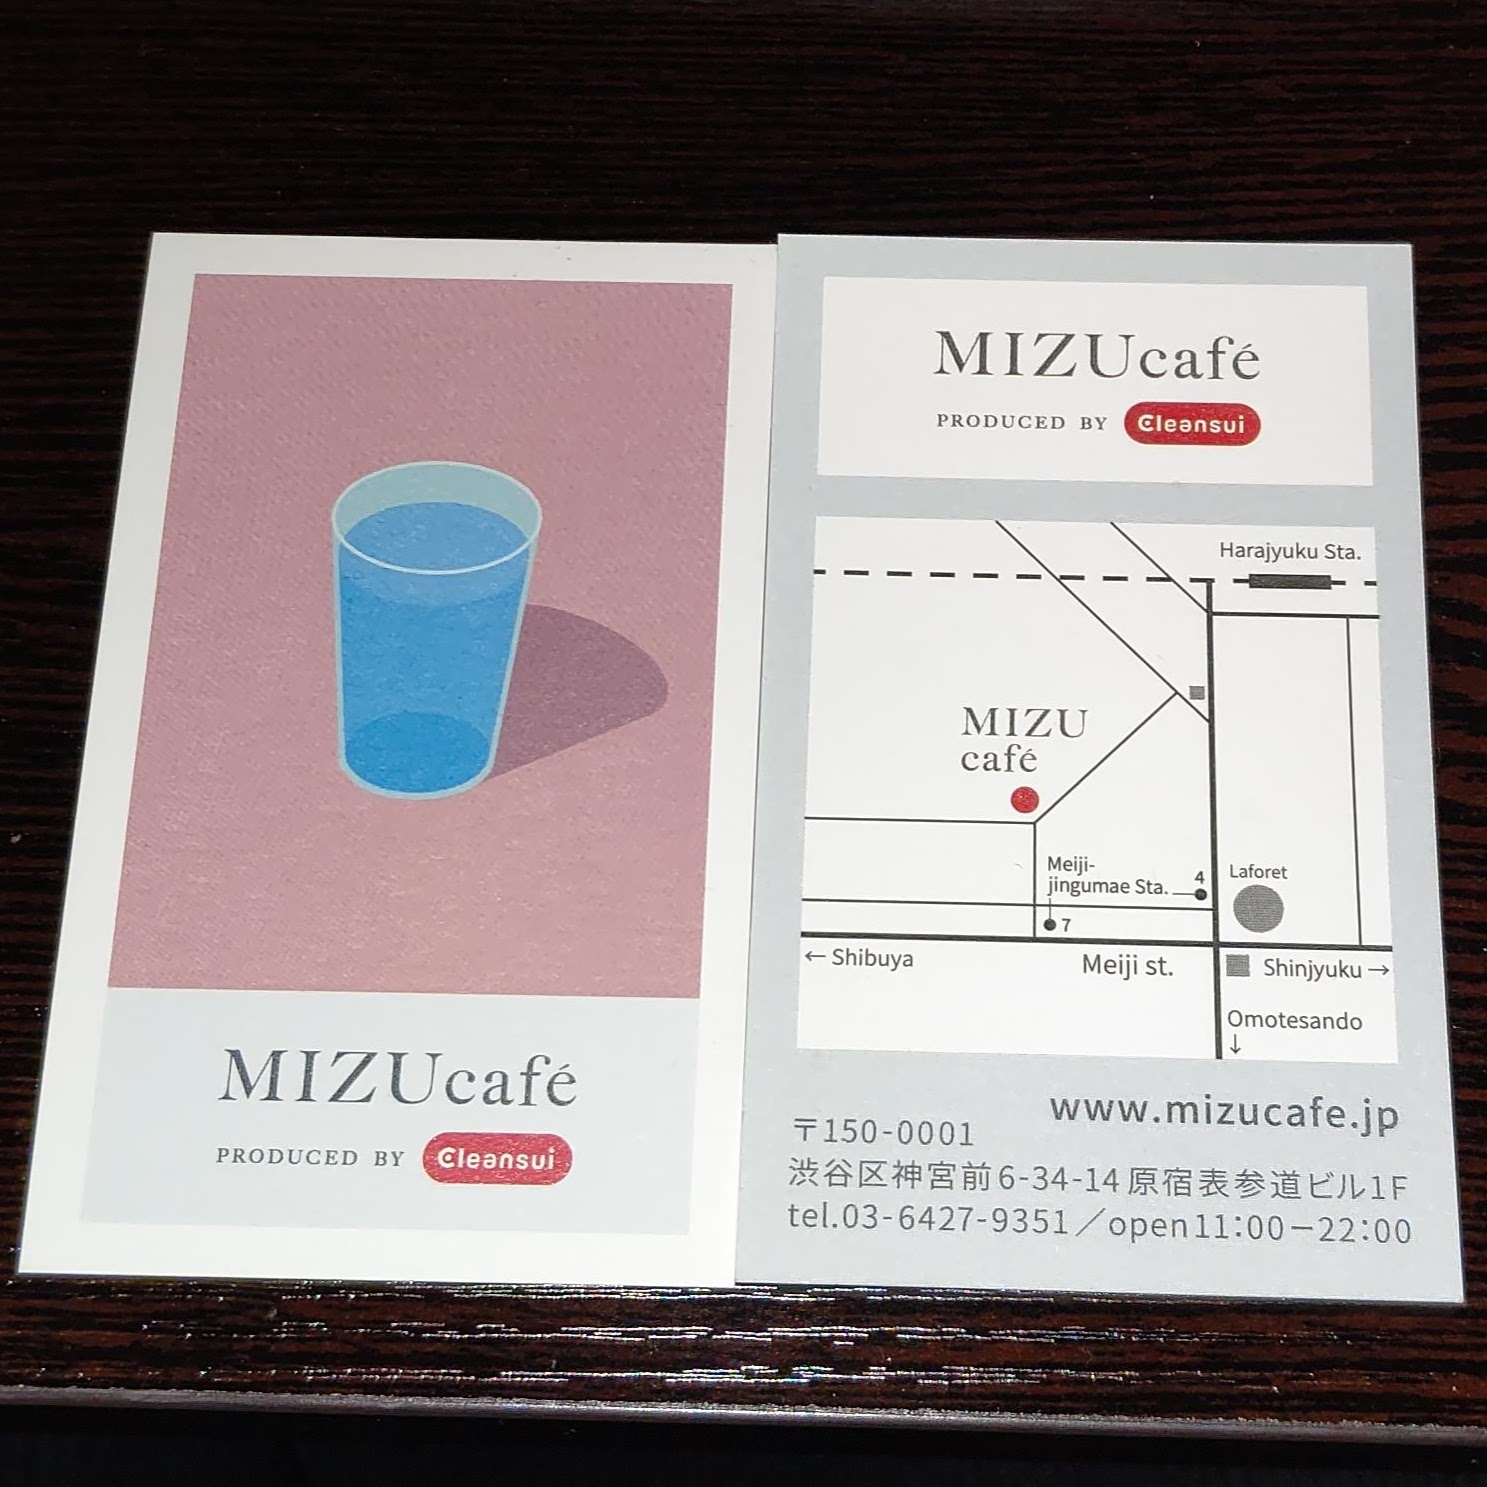 東京都渋谷区 MIZUcafe PRODUCED BY Cleansui